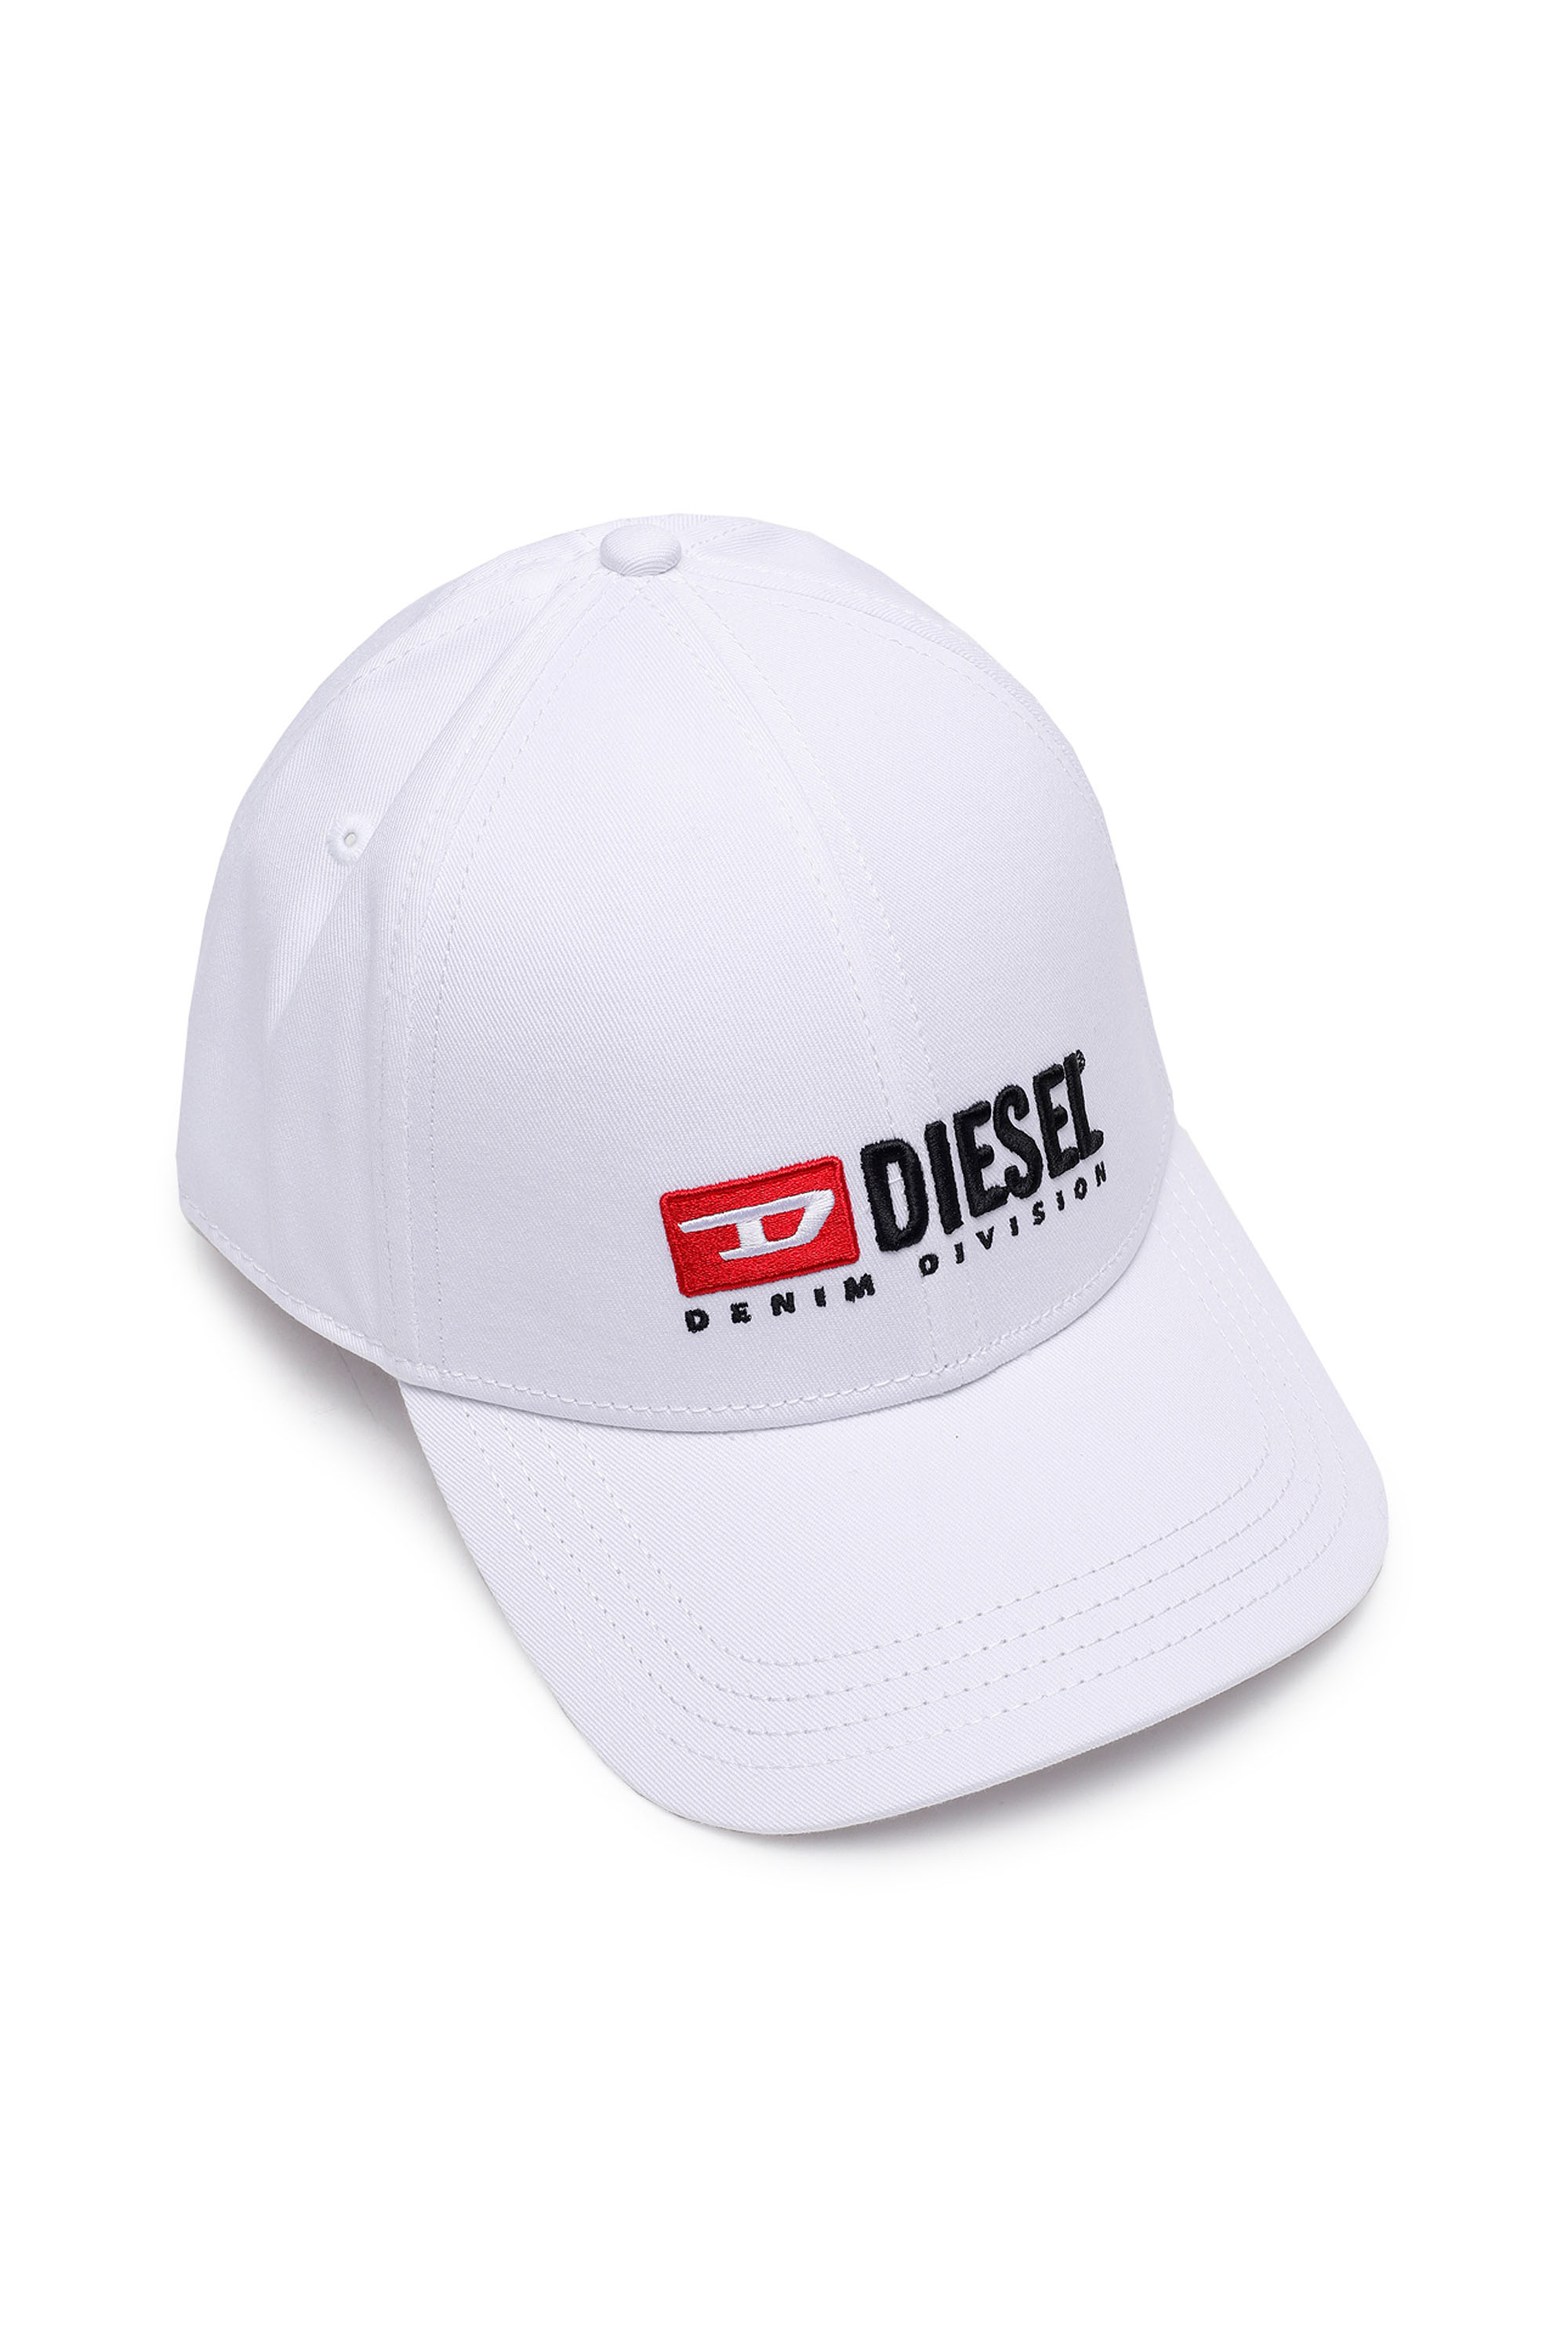 Diesel - CORRY-DIV, White - Image 3